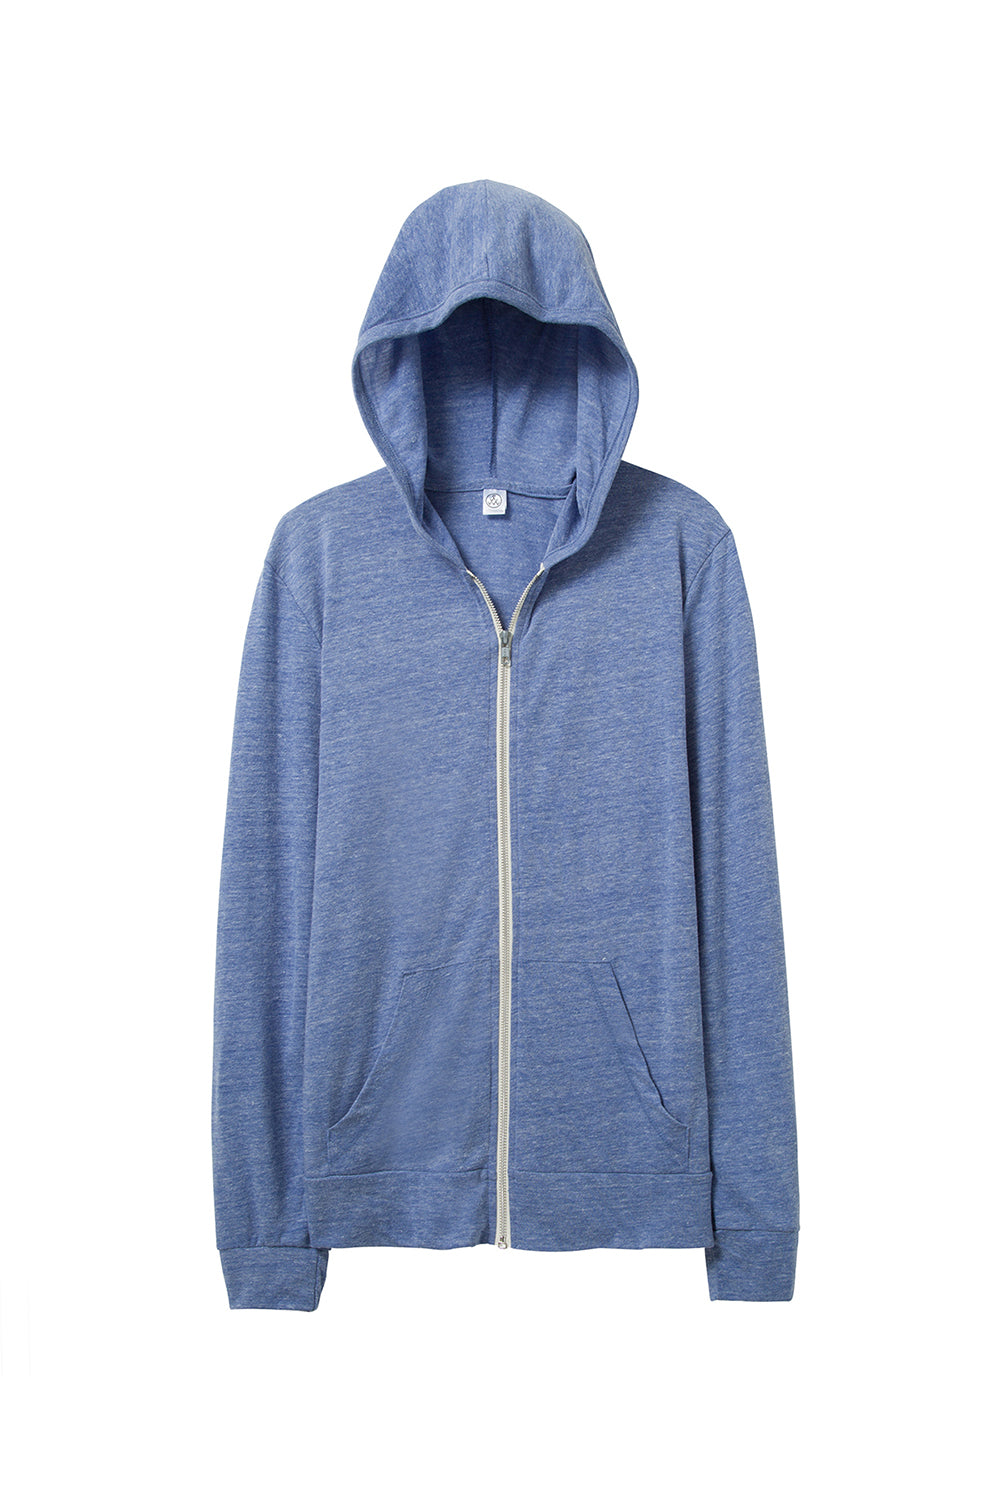 Alternative AA1970/1970E1 Mens Eco Jersey Full Zip Hooded Sweatshirt Hoodie Eco Pacific Blue Flat Front